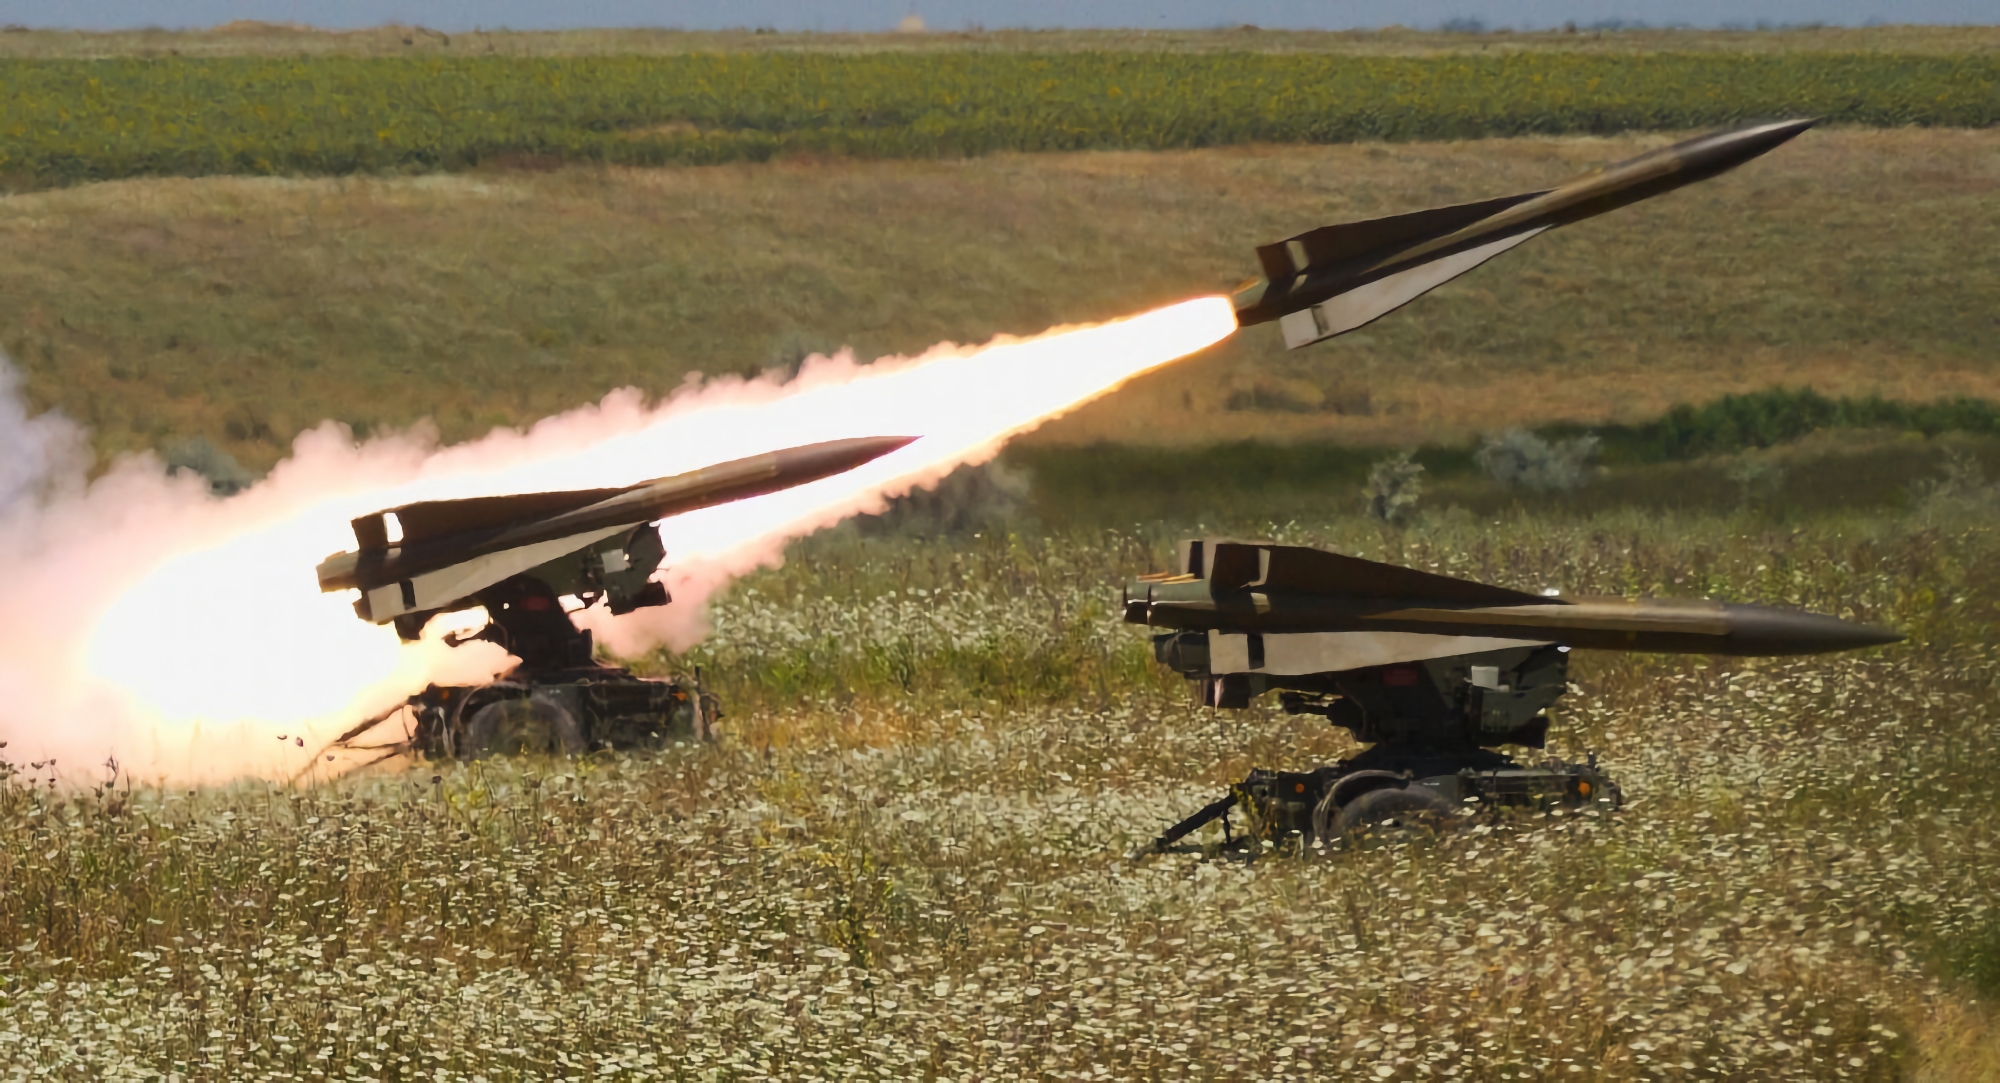 Spania overfører 6 utskytningsramper for MIM-23 Hawk bakke-til-luft-missilsystem til Ukraina